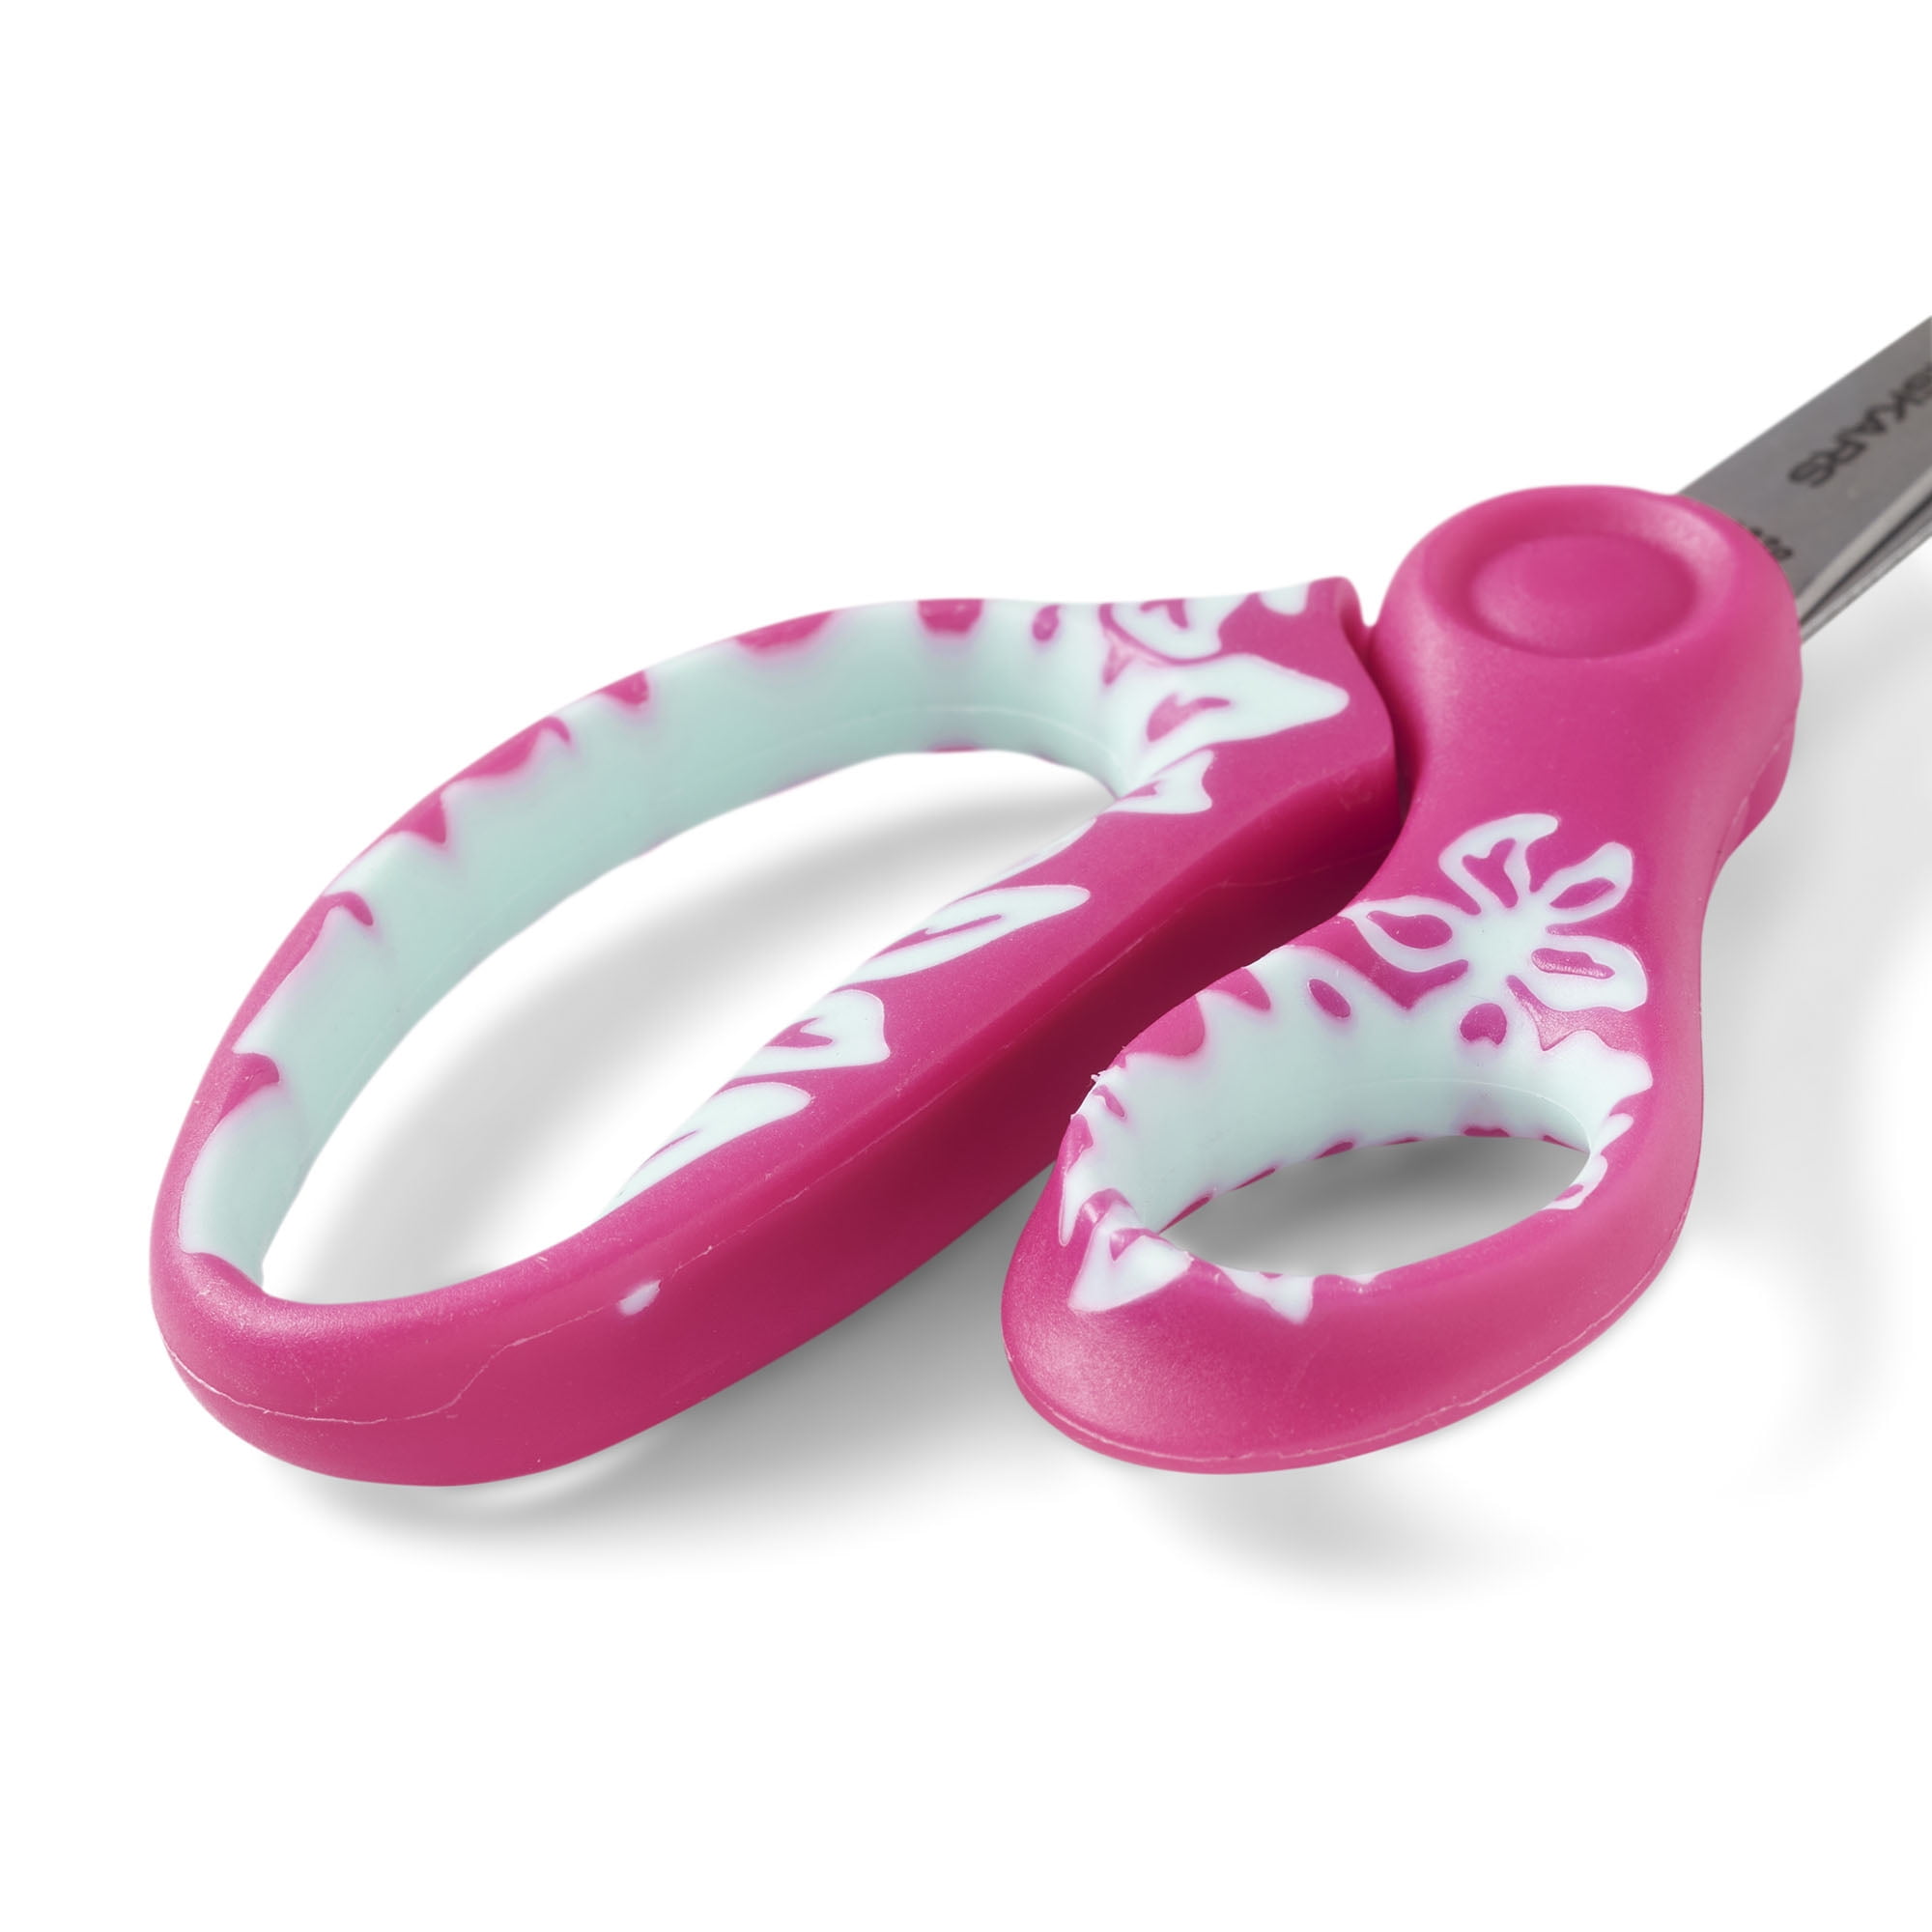 Scissors soft grip handle office depot blunt tip pink green blue craft kids  NWT